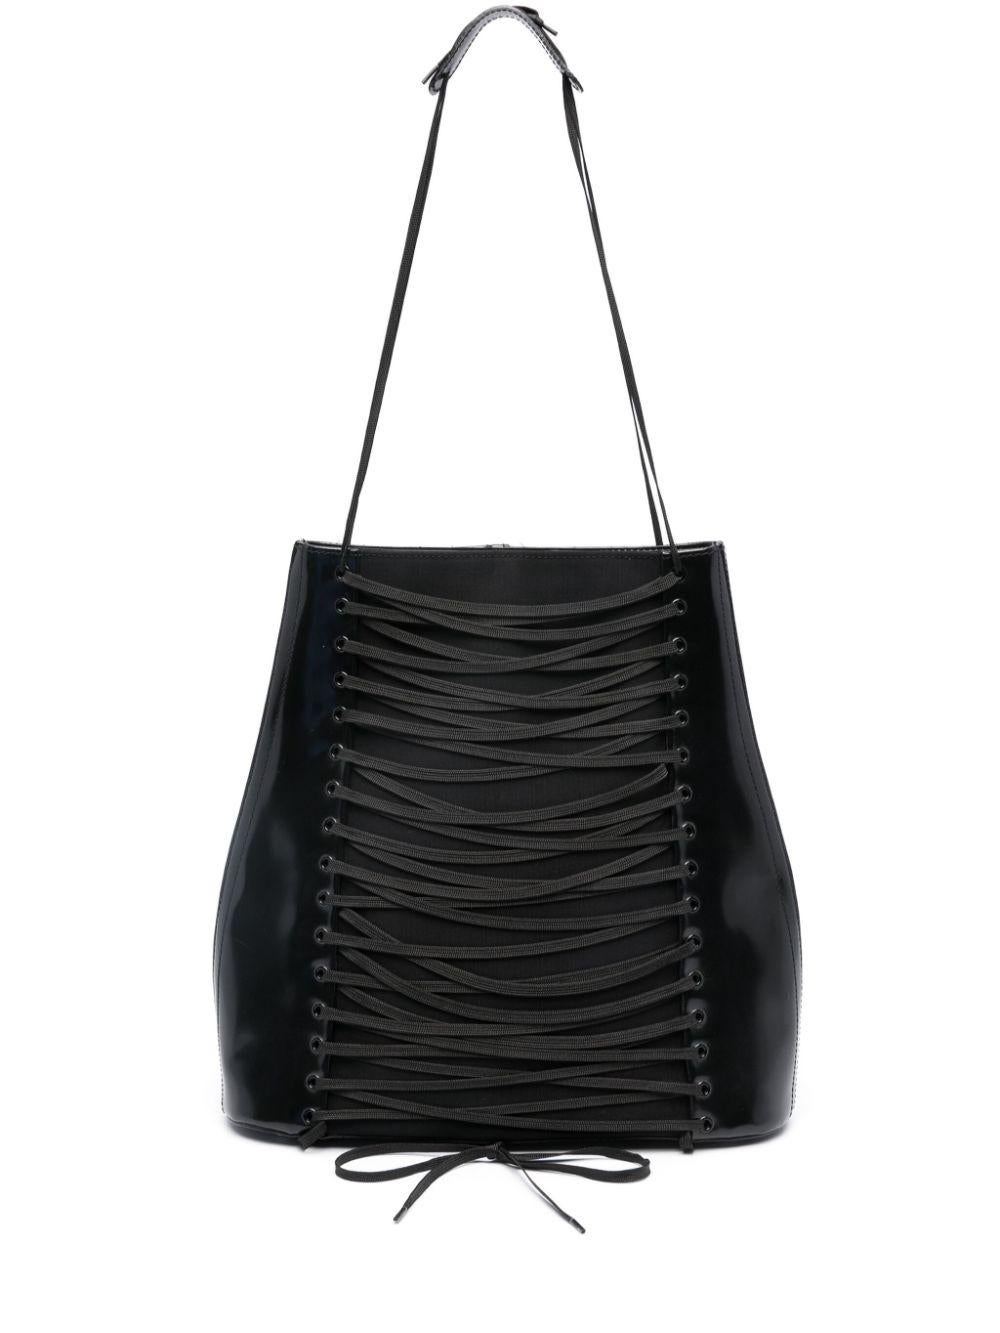 Jean Paul Gaultier Black Corset Leather Shoulder Bag For Sale 2